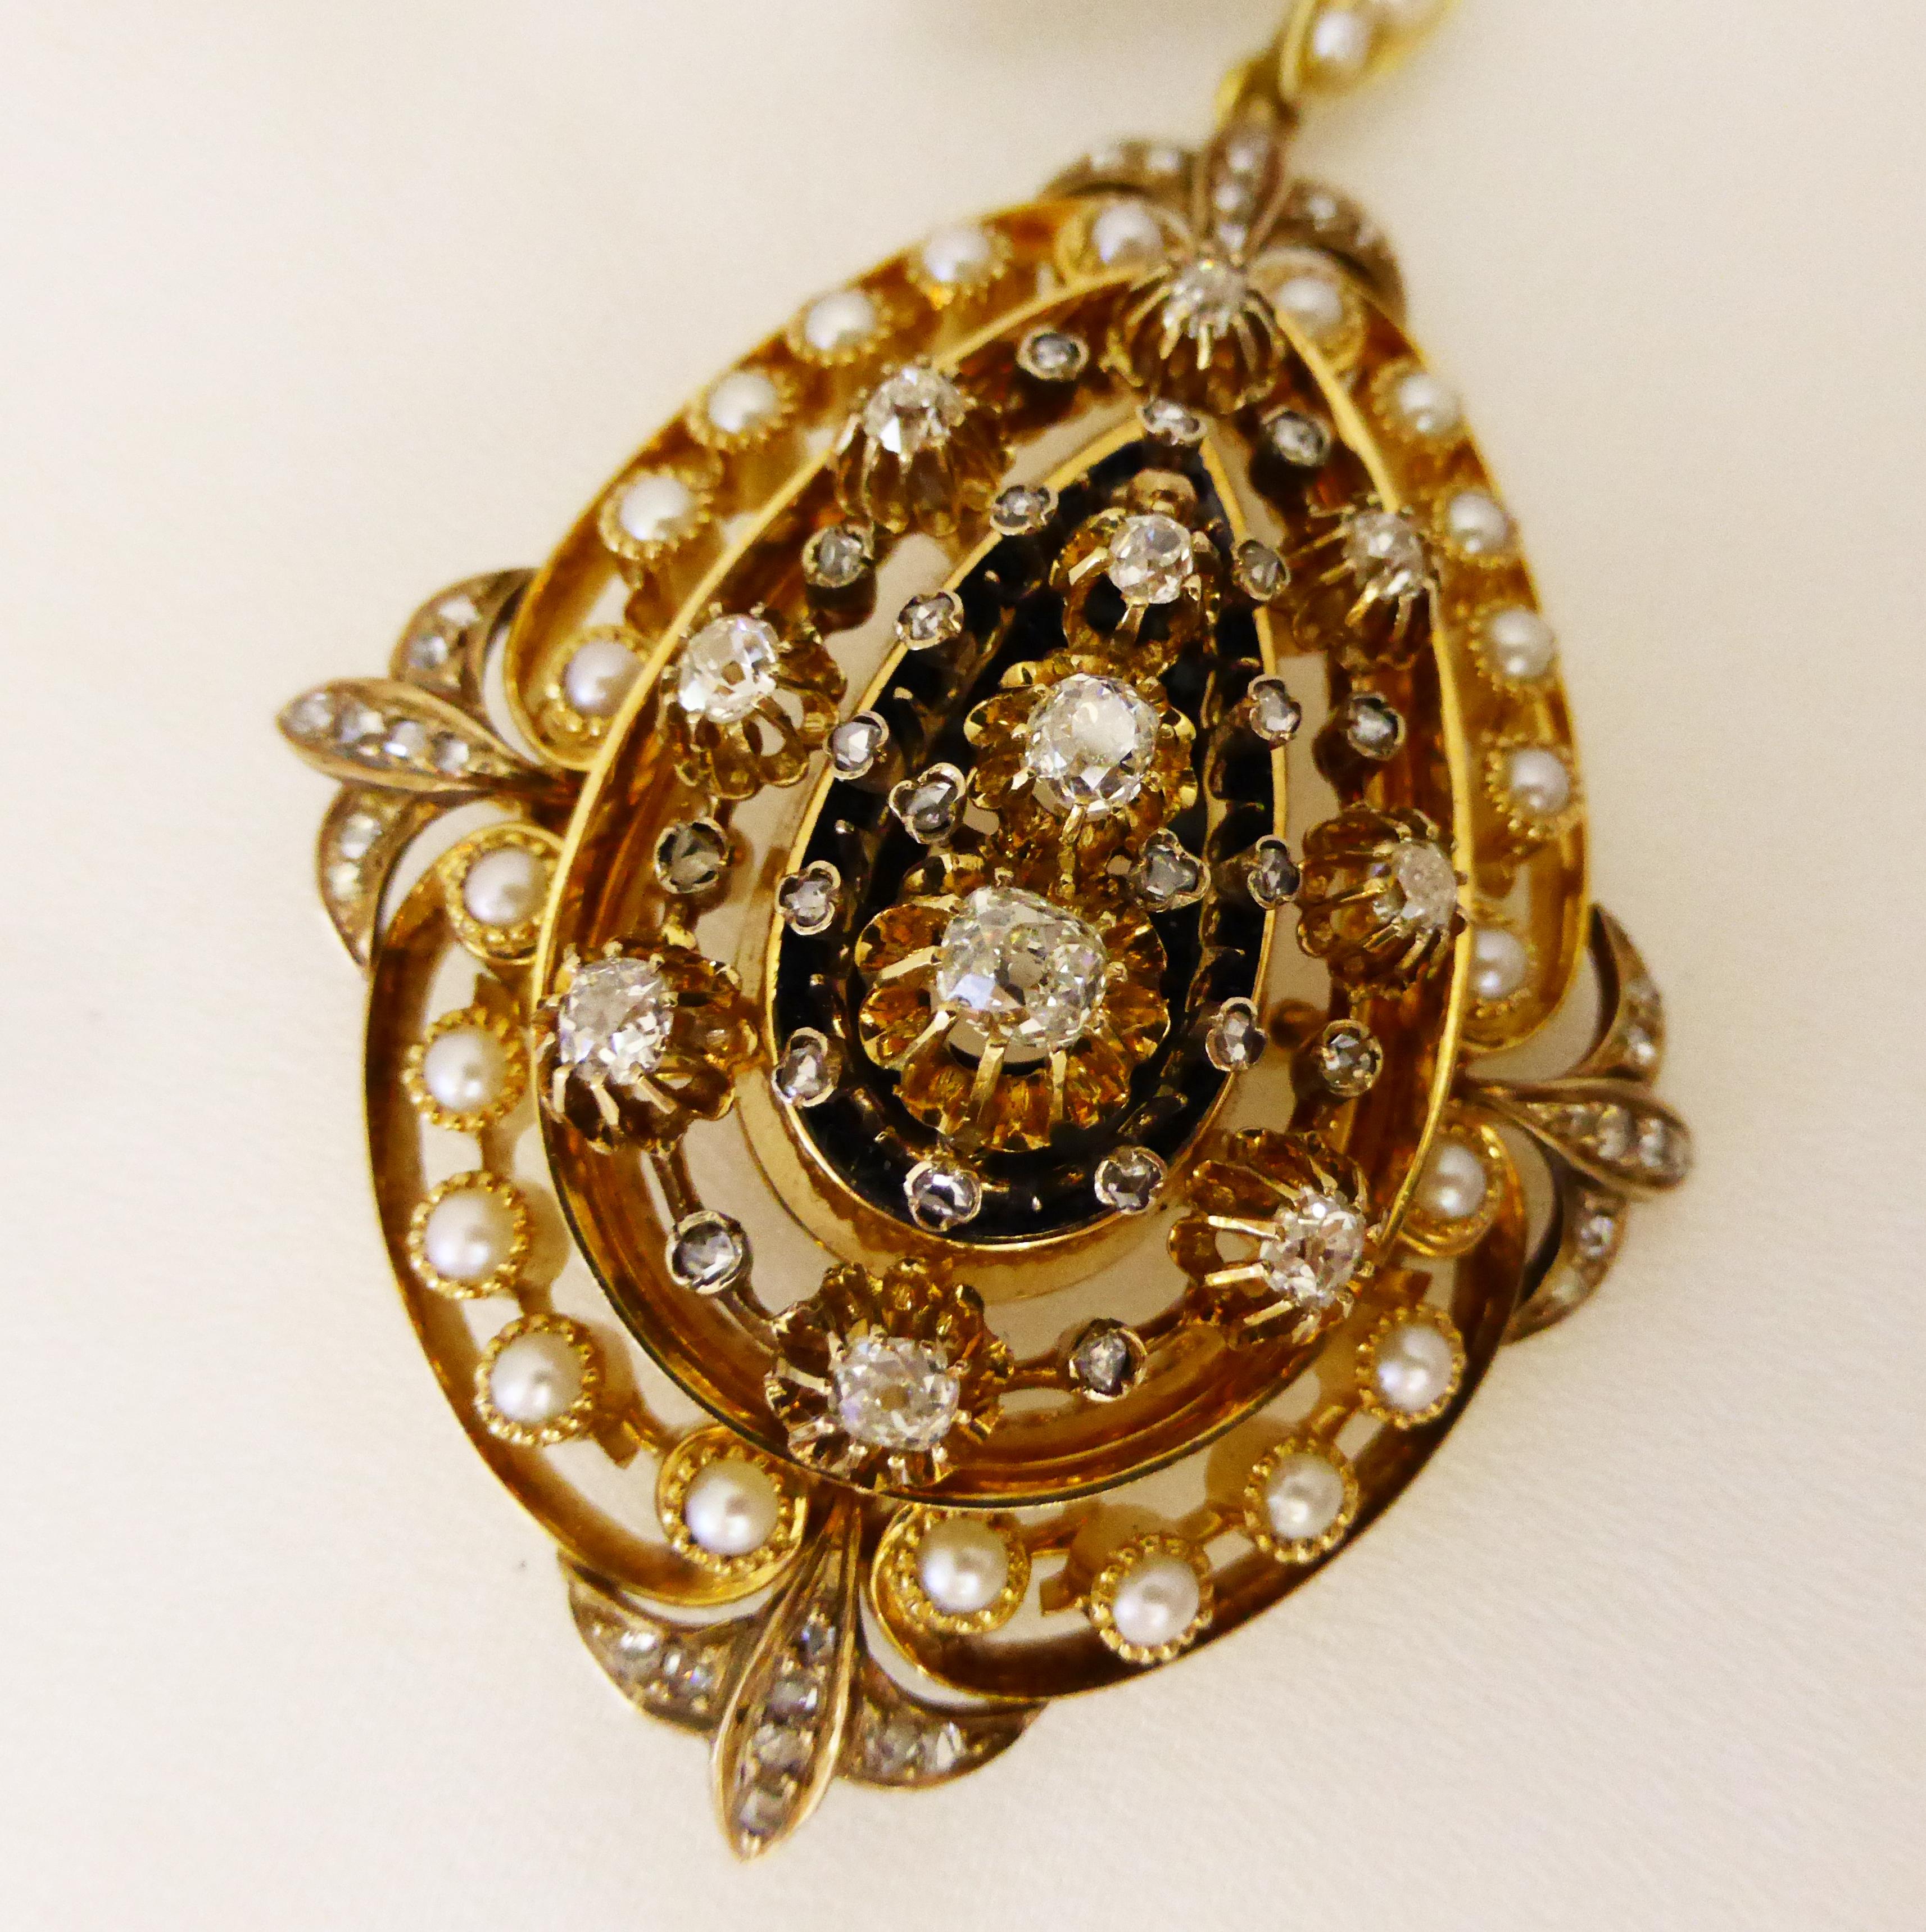 Platinum 18 Carat Old-Cut Diamond Natural Pearl French Pendant, circa 1880s (Napoleon III.)